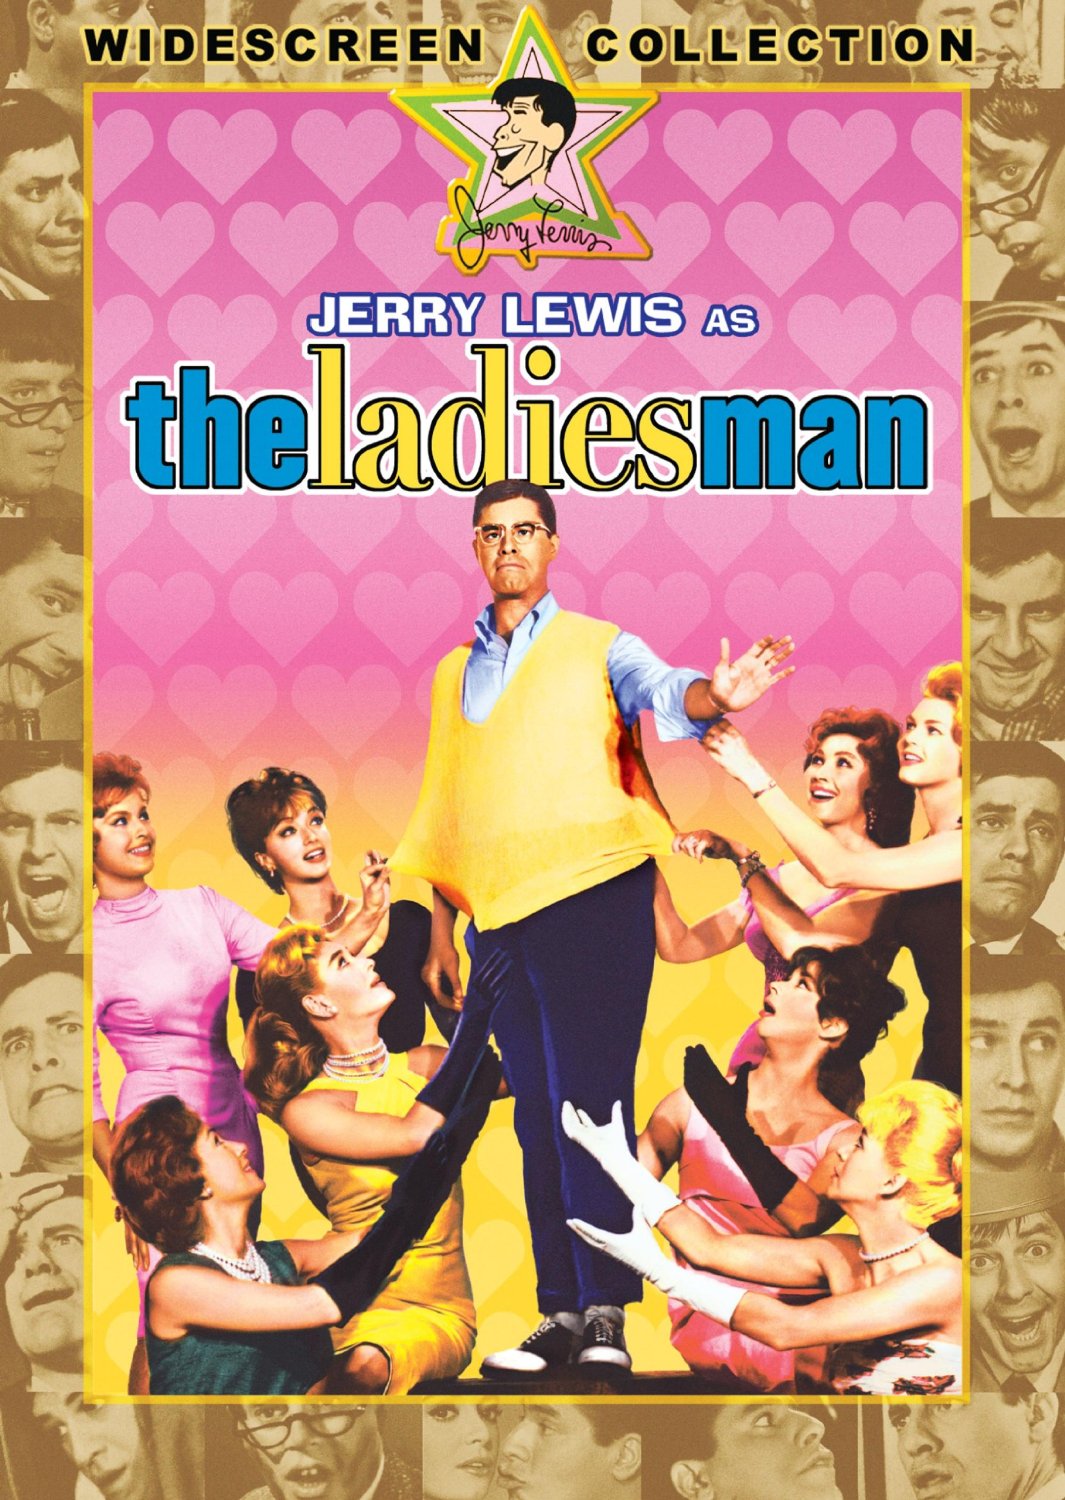 The Ladies Man starring Jerry Lewis